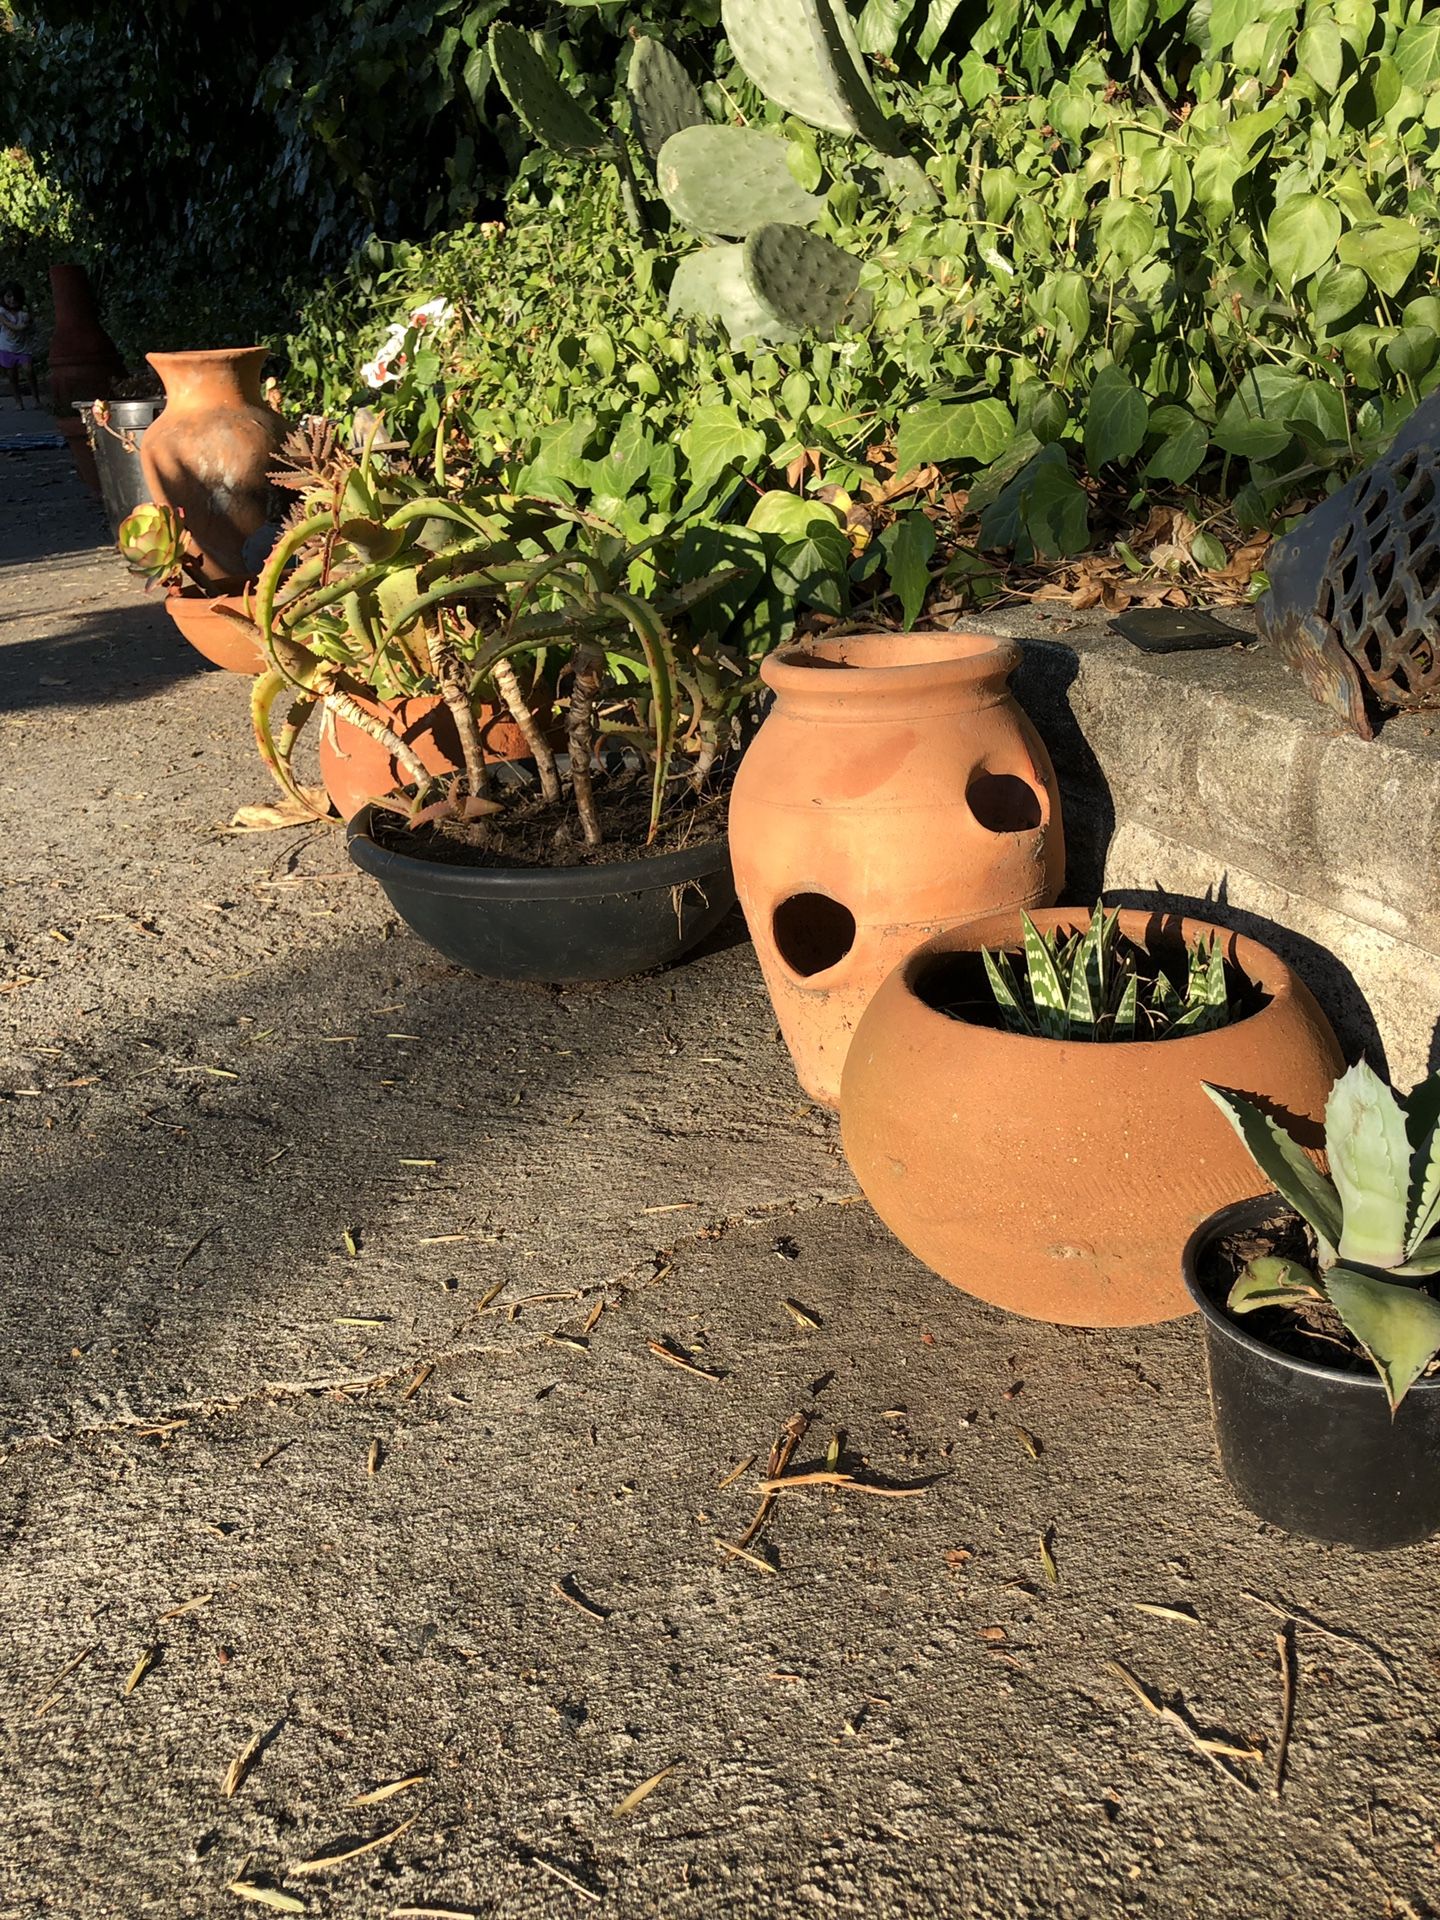 Clay pots and chiminea